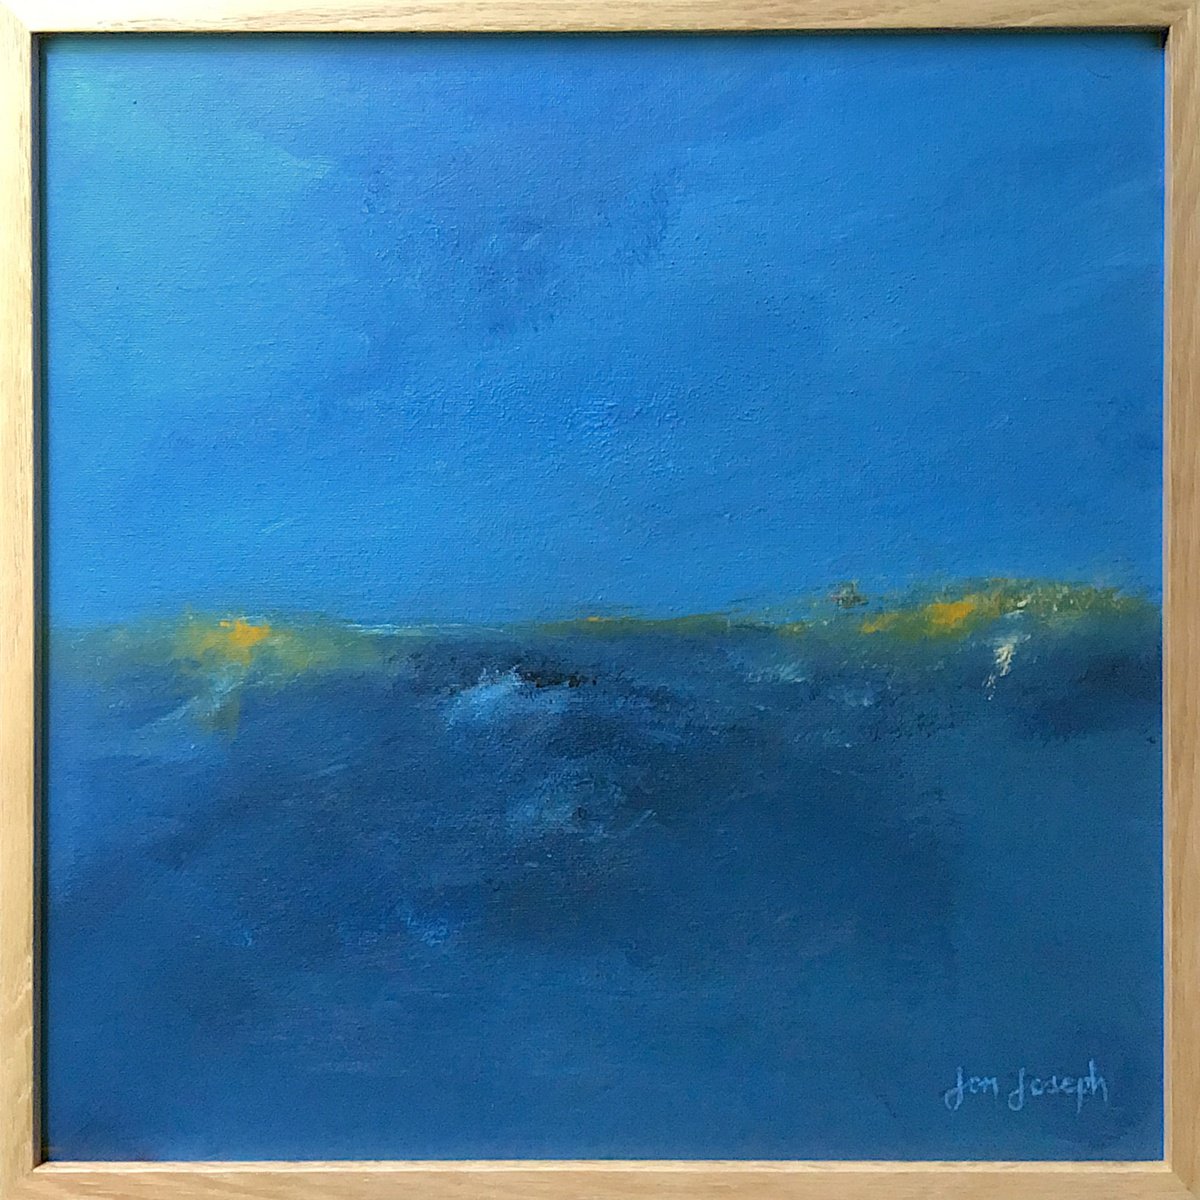 Flow 2 (Blue) - Framed acrylic painting, 40 x 40cm by Jon Joseph